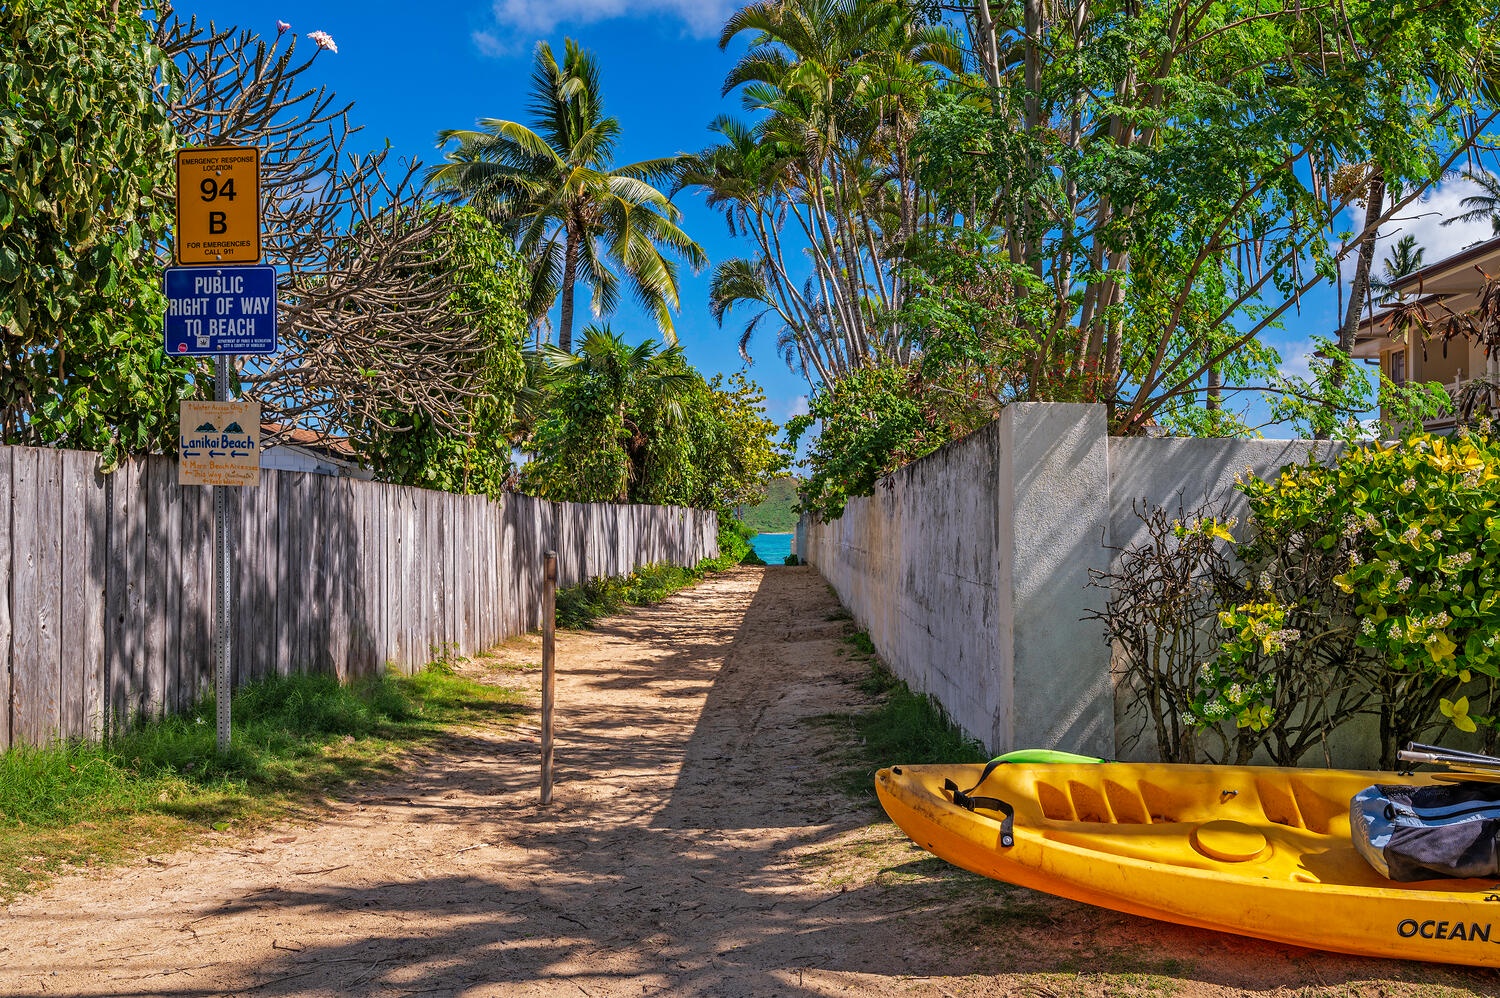 Kailua Vacation Rentals, Villa Hui Hou - Just a short walk to a Lanikai Ocean access cove (#11)!